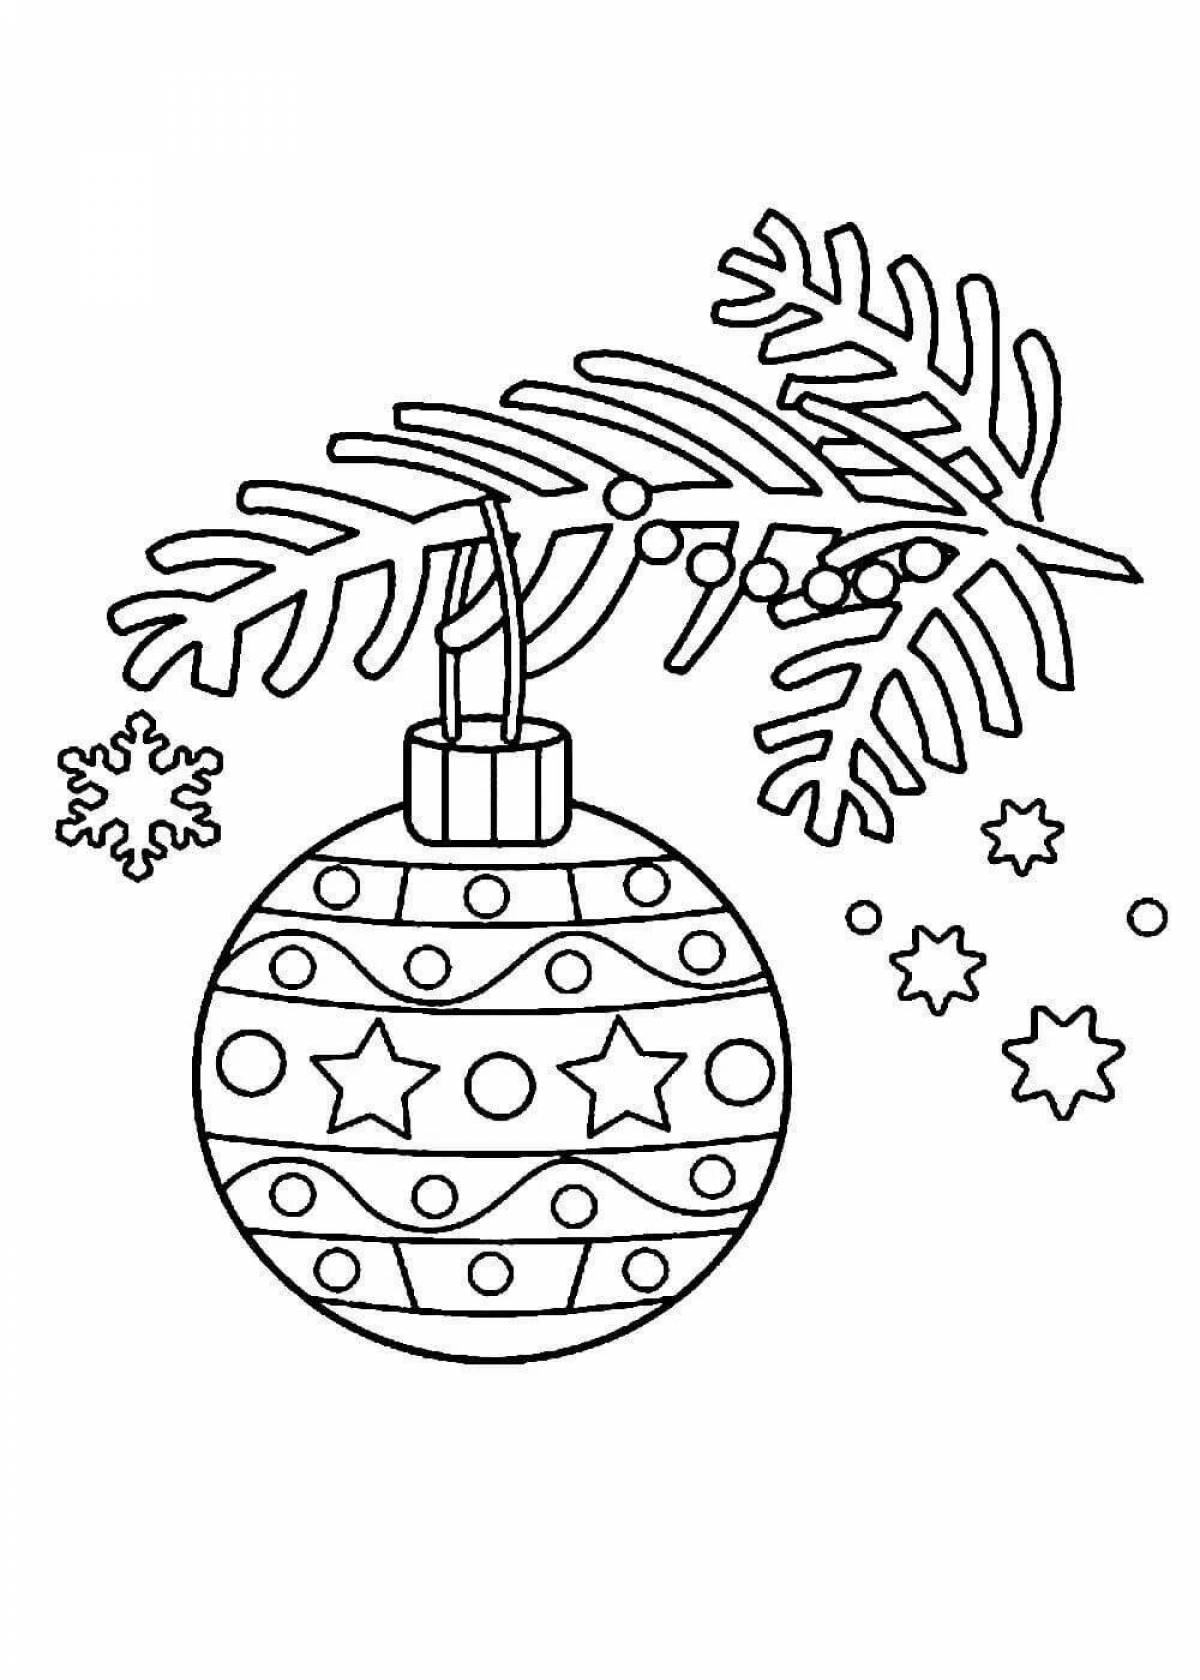 Christmas tree branch fun coloring